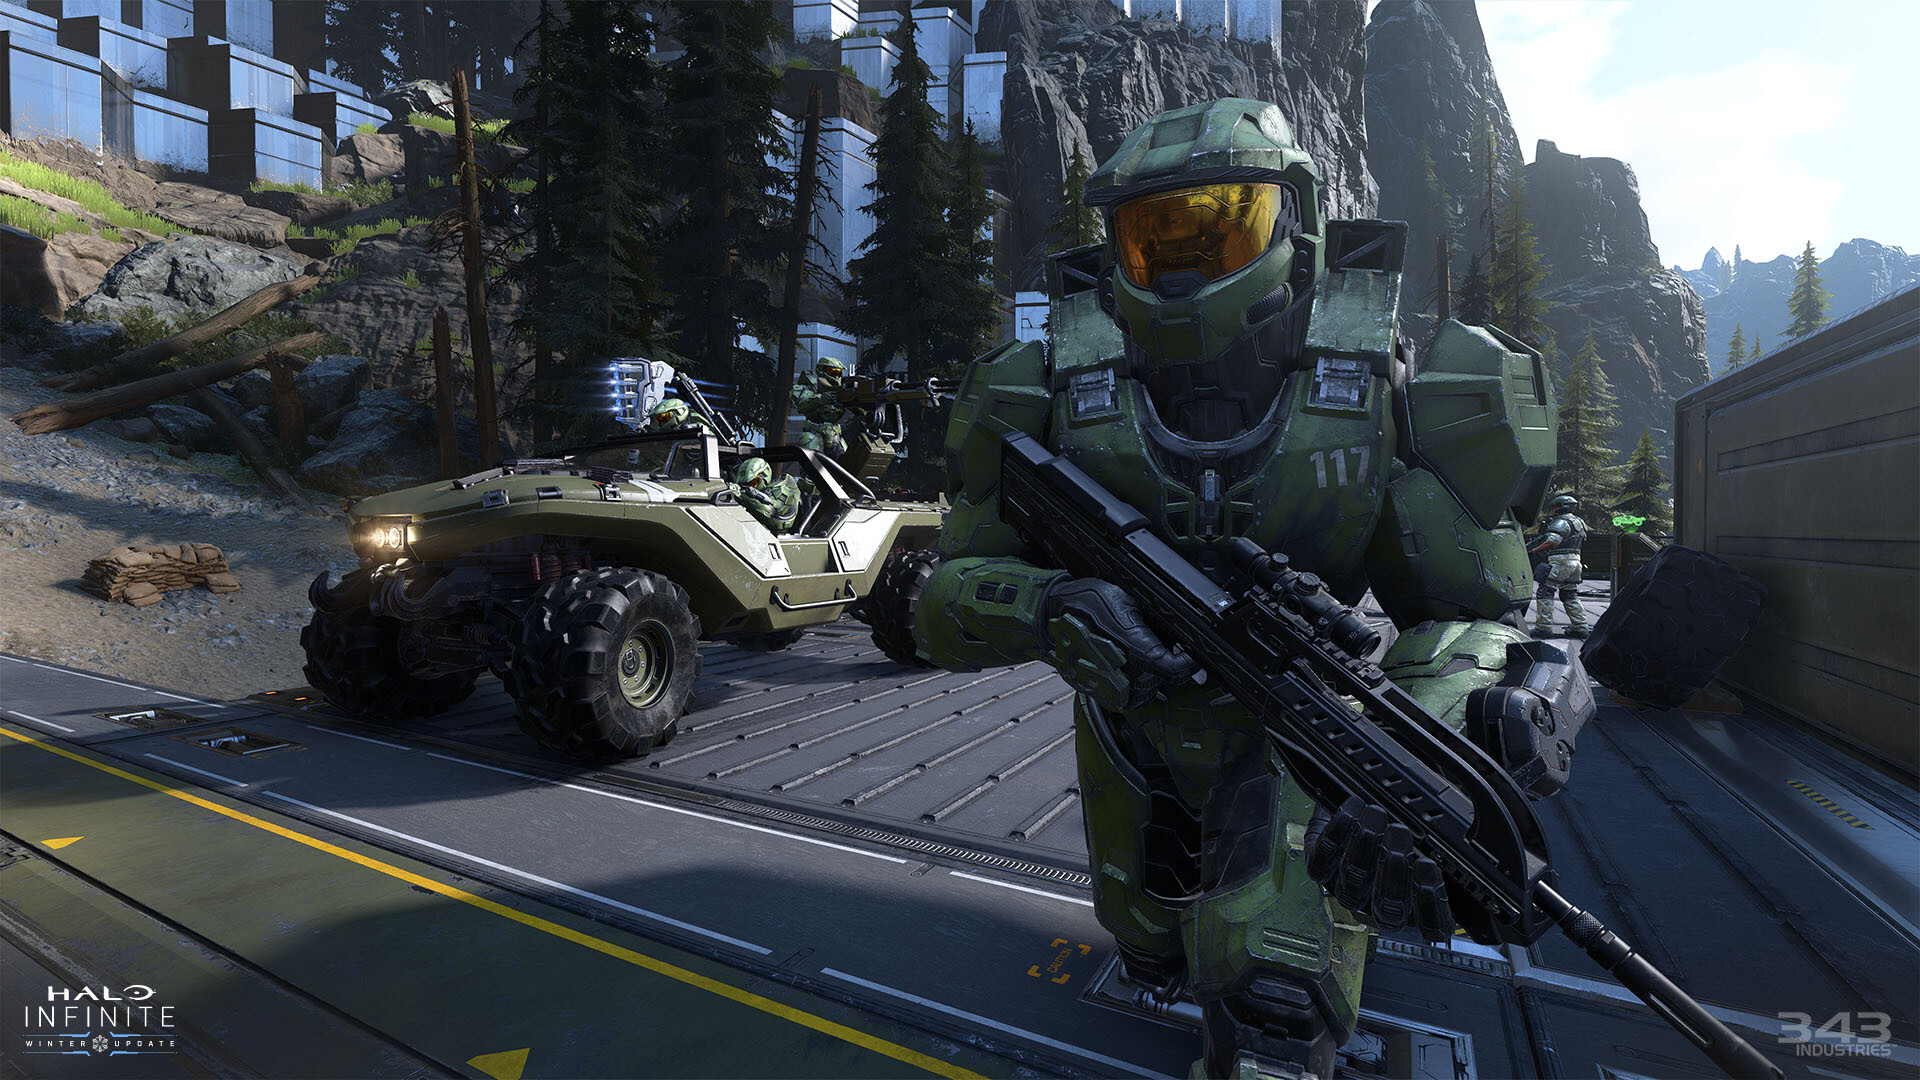 Halo Infinite para Xbox One e Xbox Series X - Microsoft + Baralho